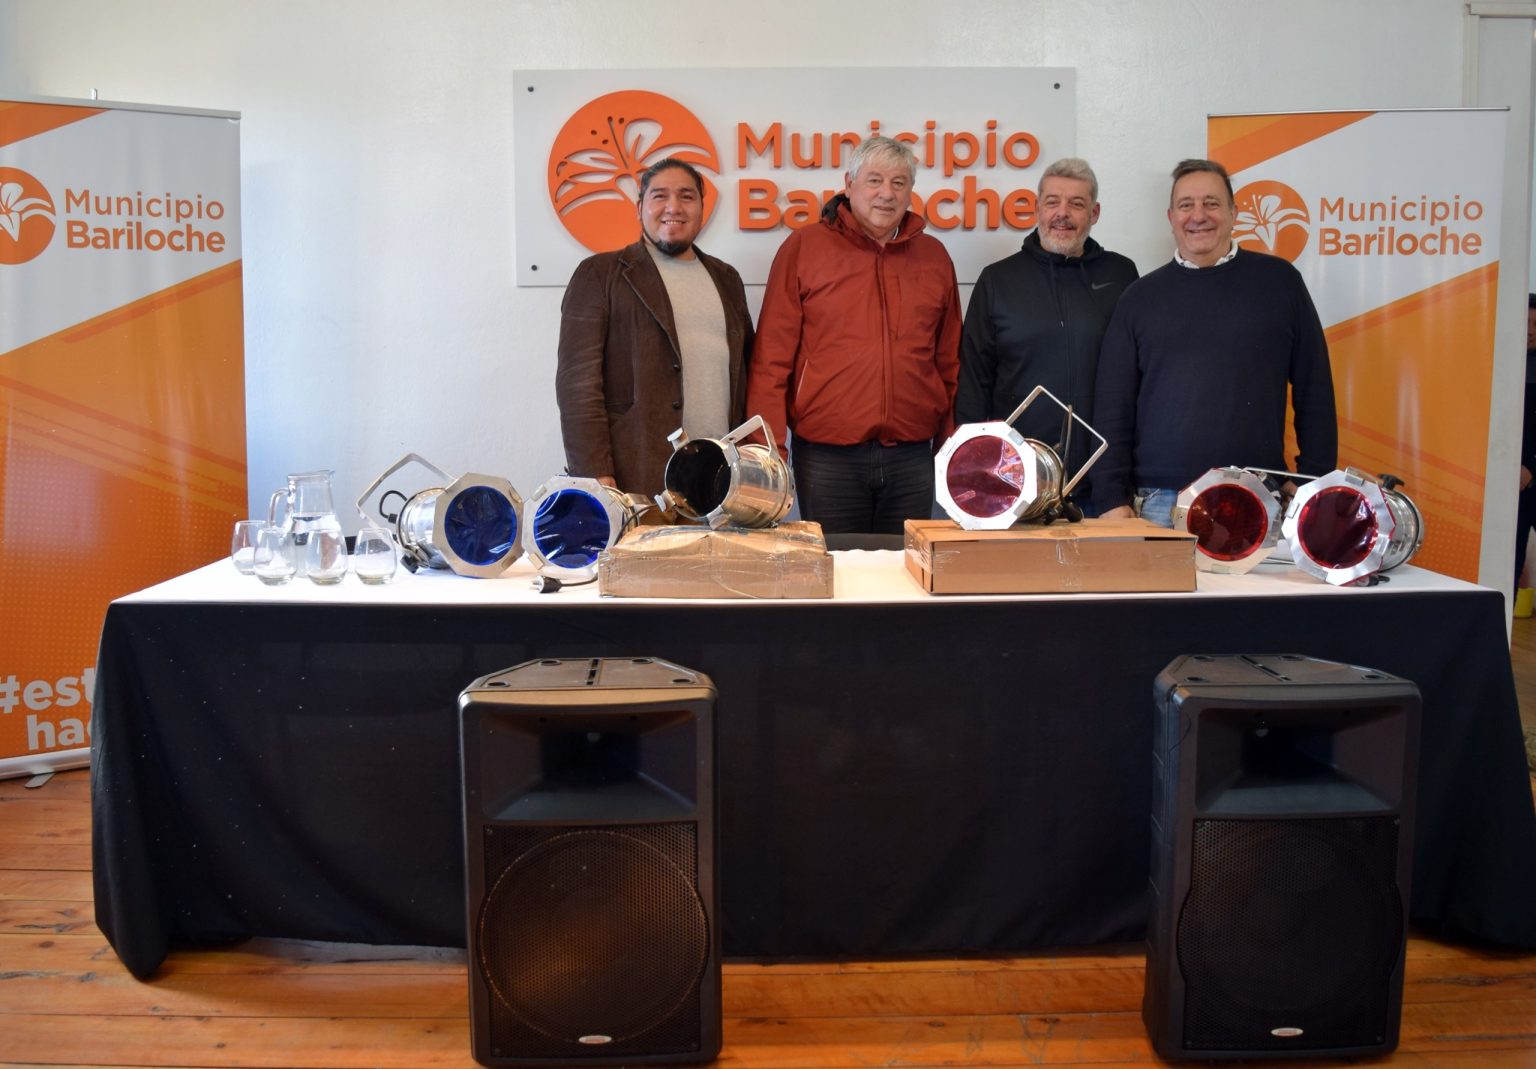 Discoteca donó equipamiento de sonido al municipio de Bariloche